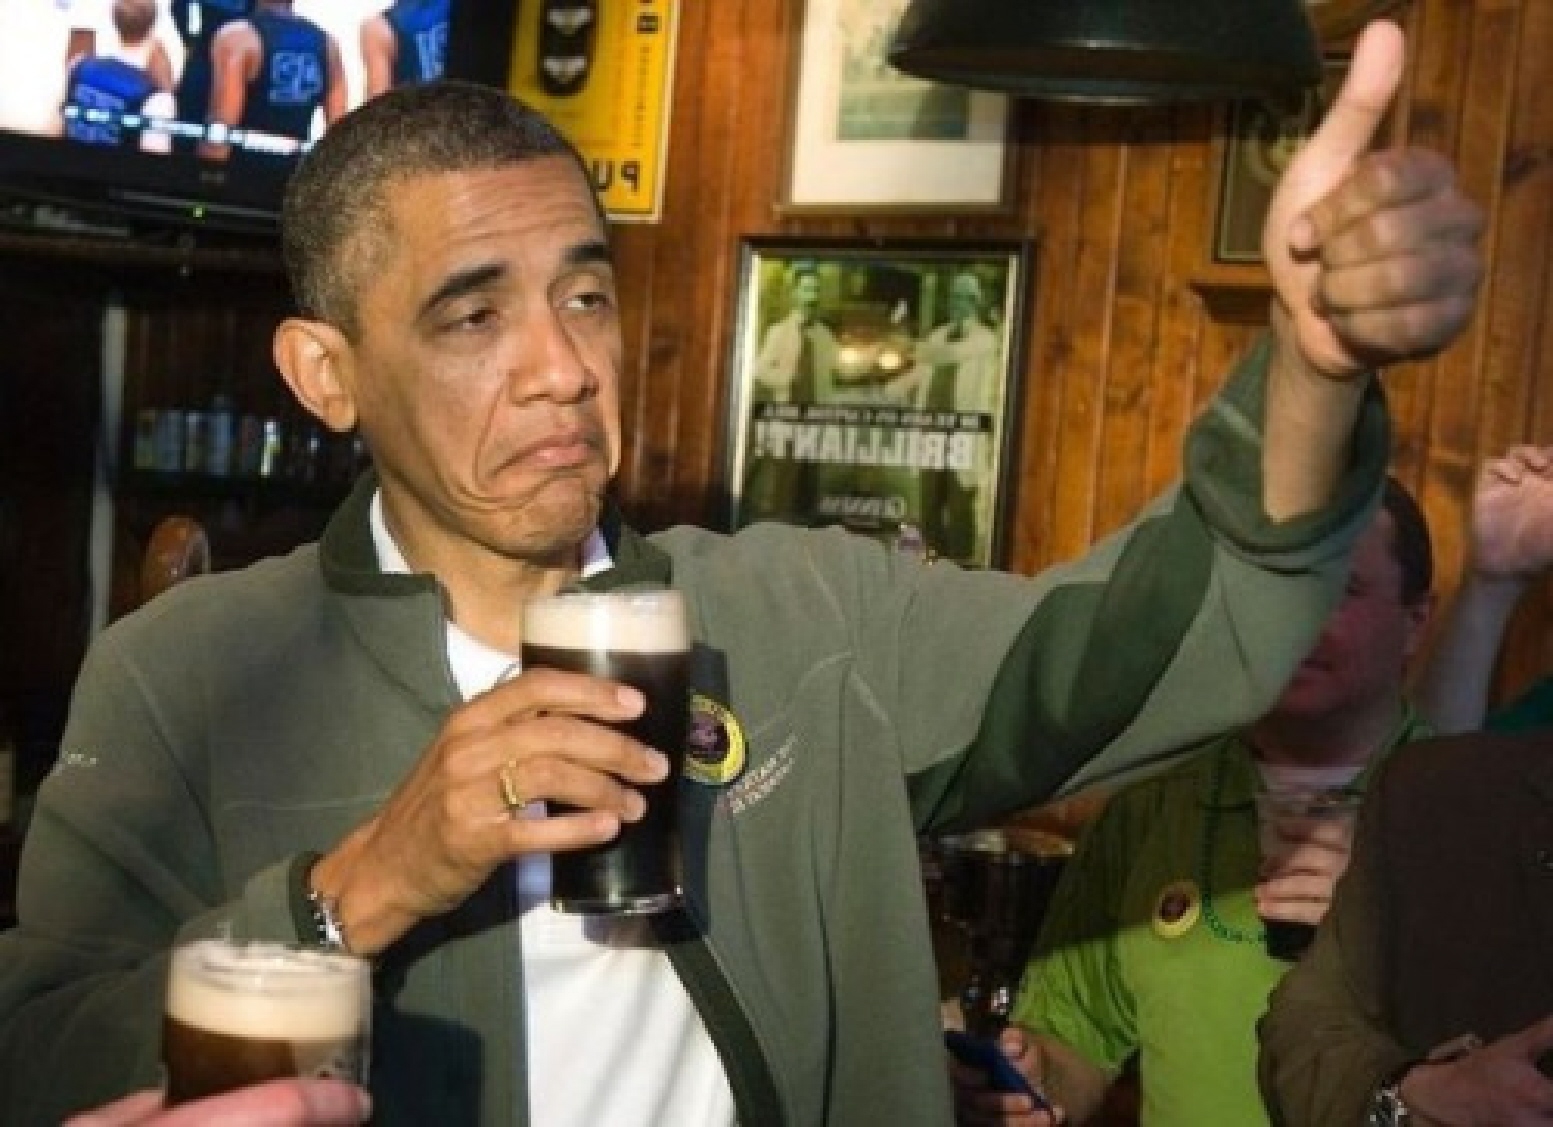 drunk-obama-thumbs-up2.jpg